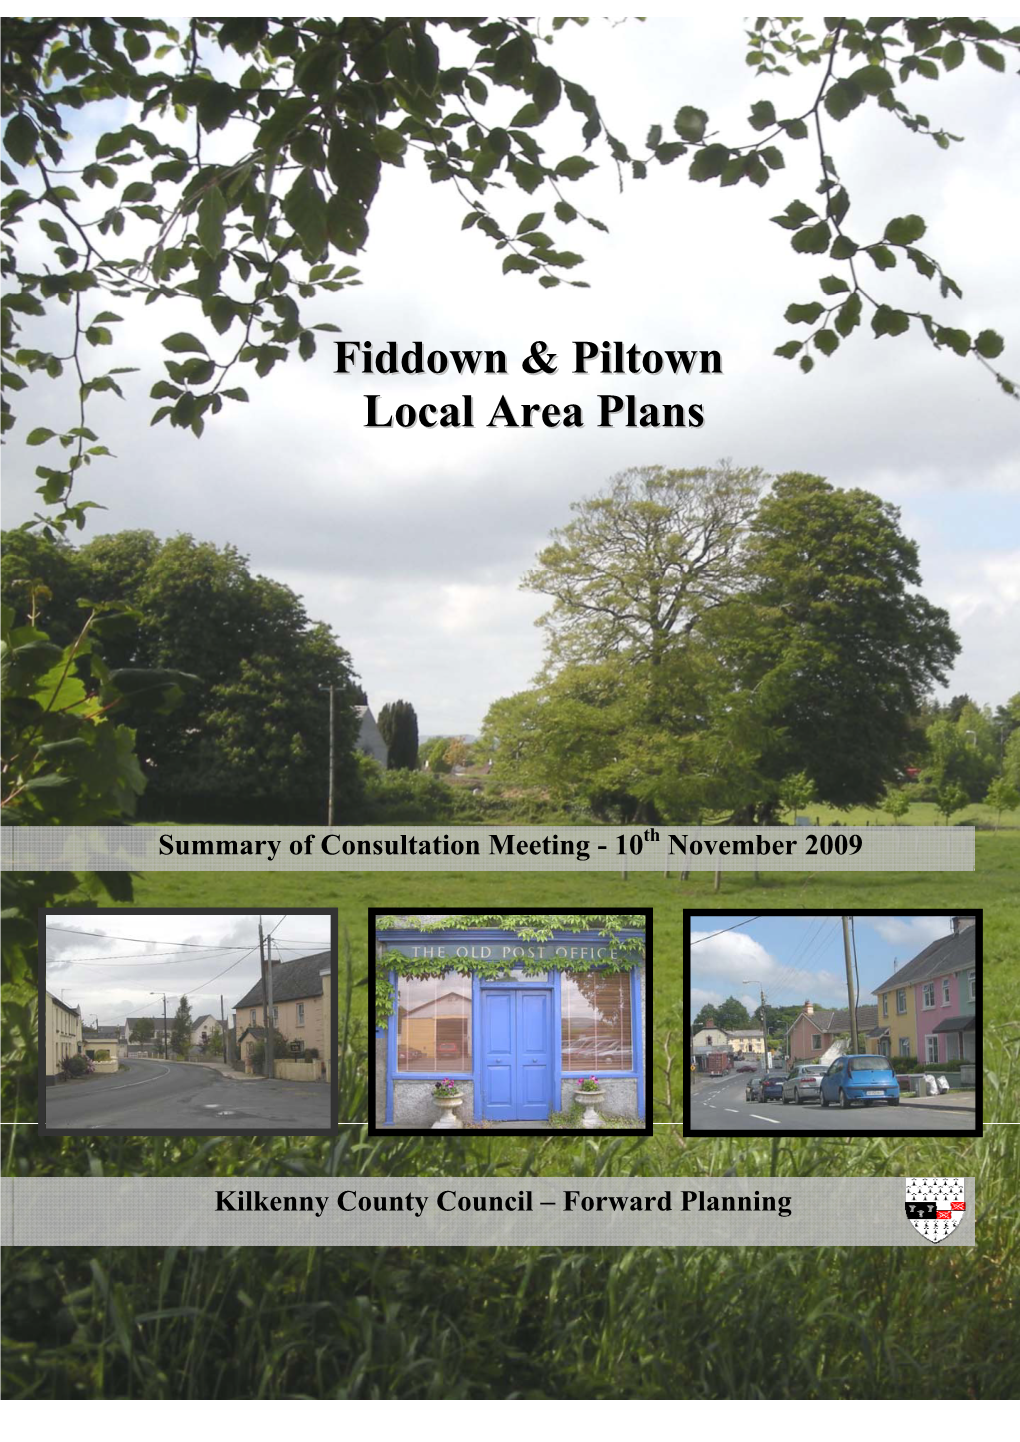 Fiddown & Piltown Local Area Plans